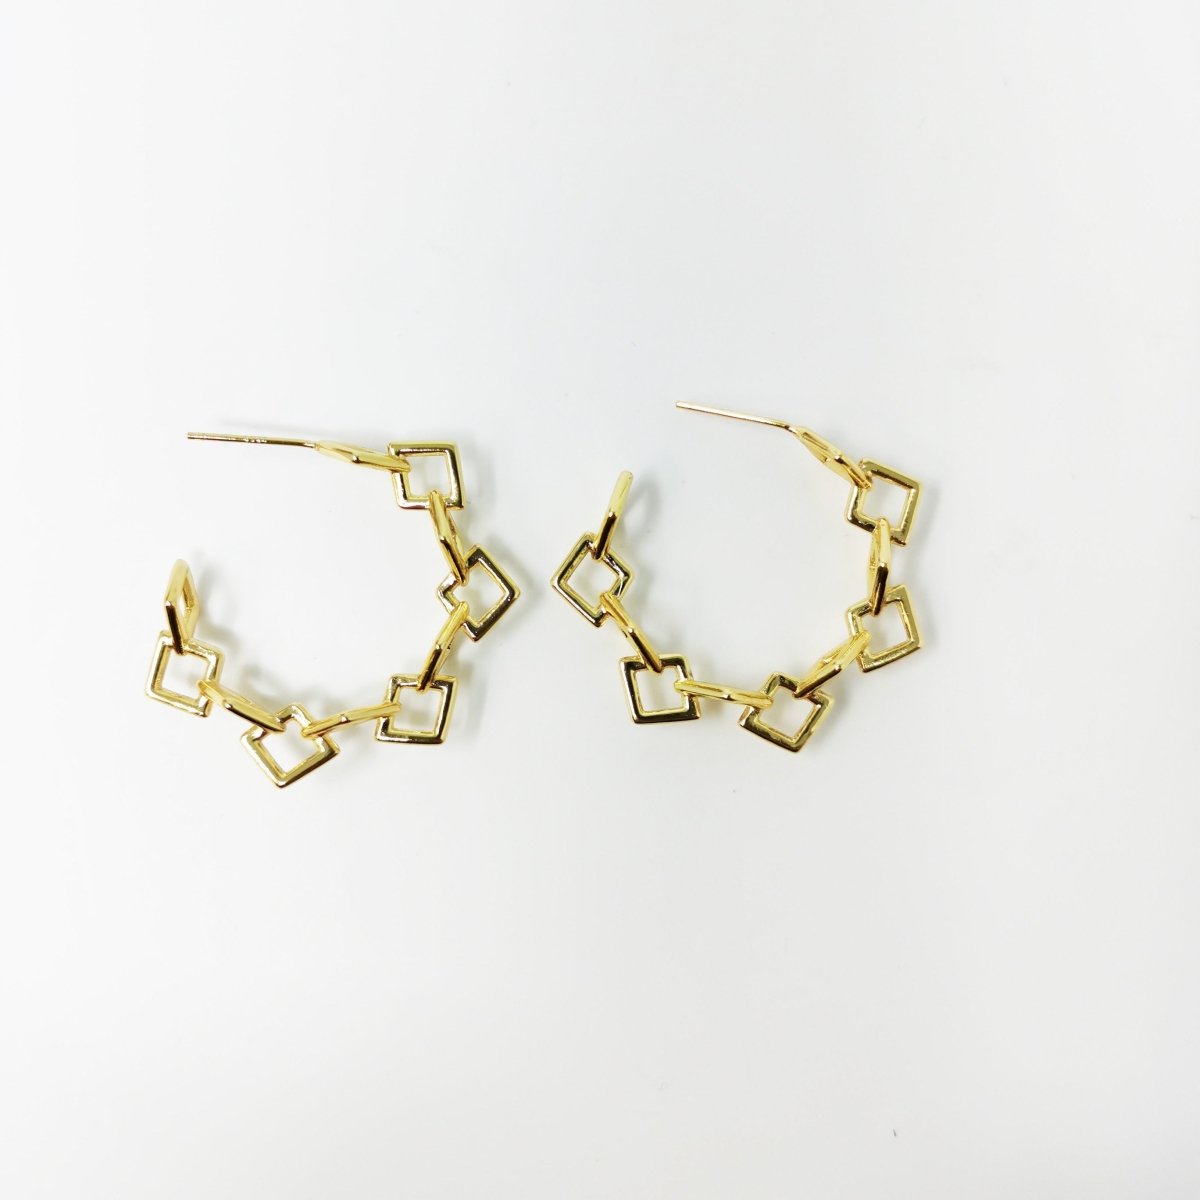 24k Vermeil Gold Earrings, Hoop Earrings, Medium Hoop, Square Linked Earring, Gift for Her, Earrings for Women, Everyday Wear Earrings, K-741 - DLUXCA